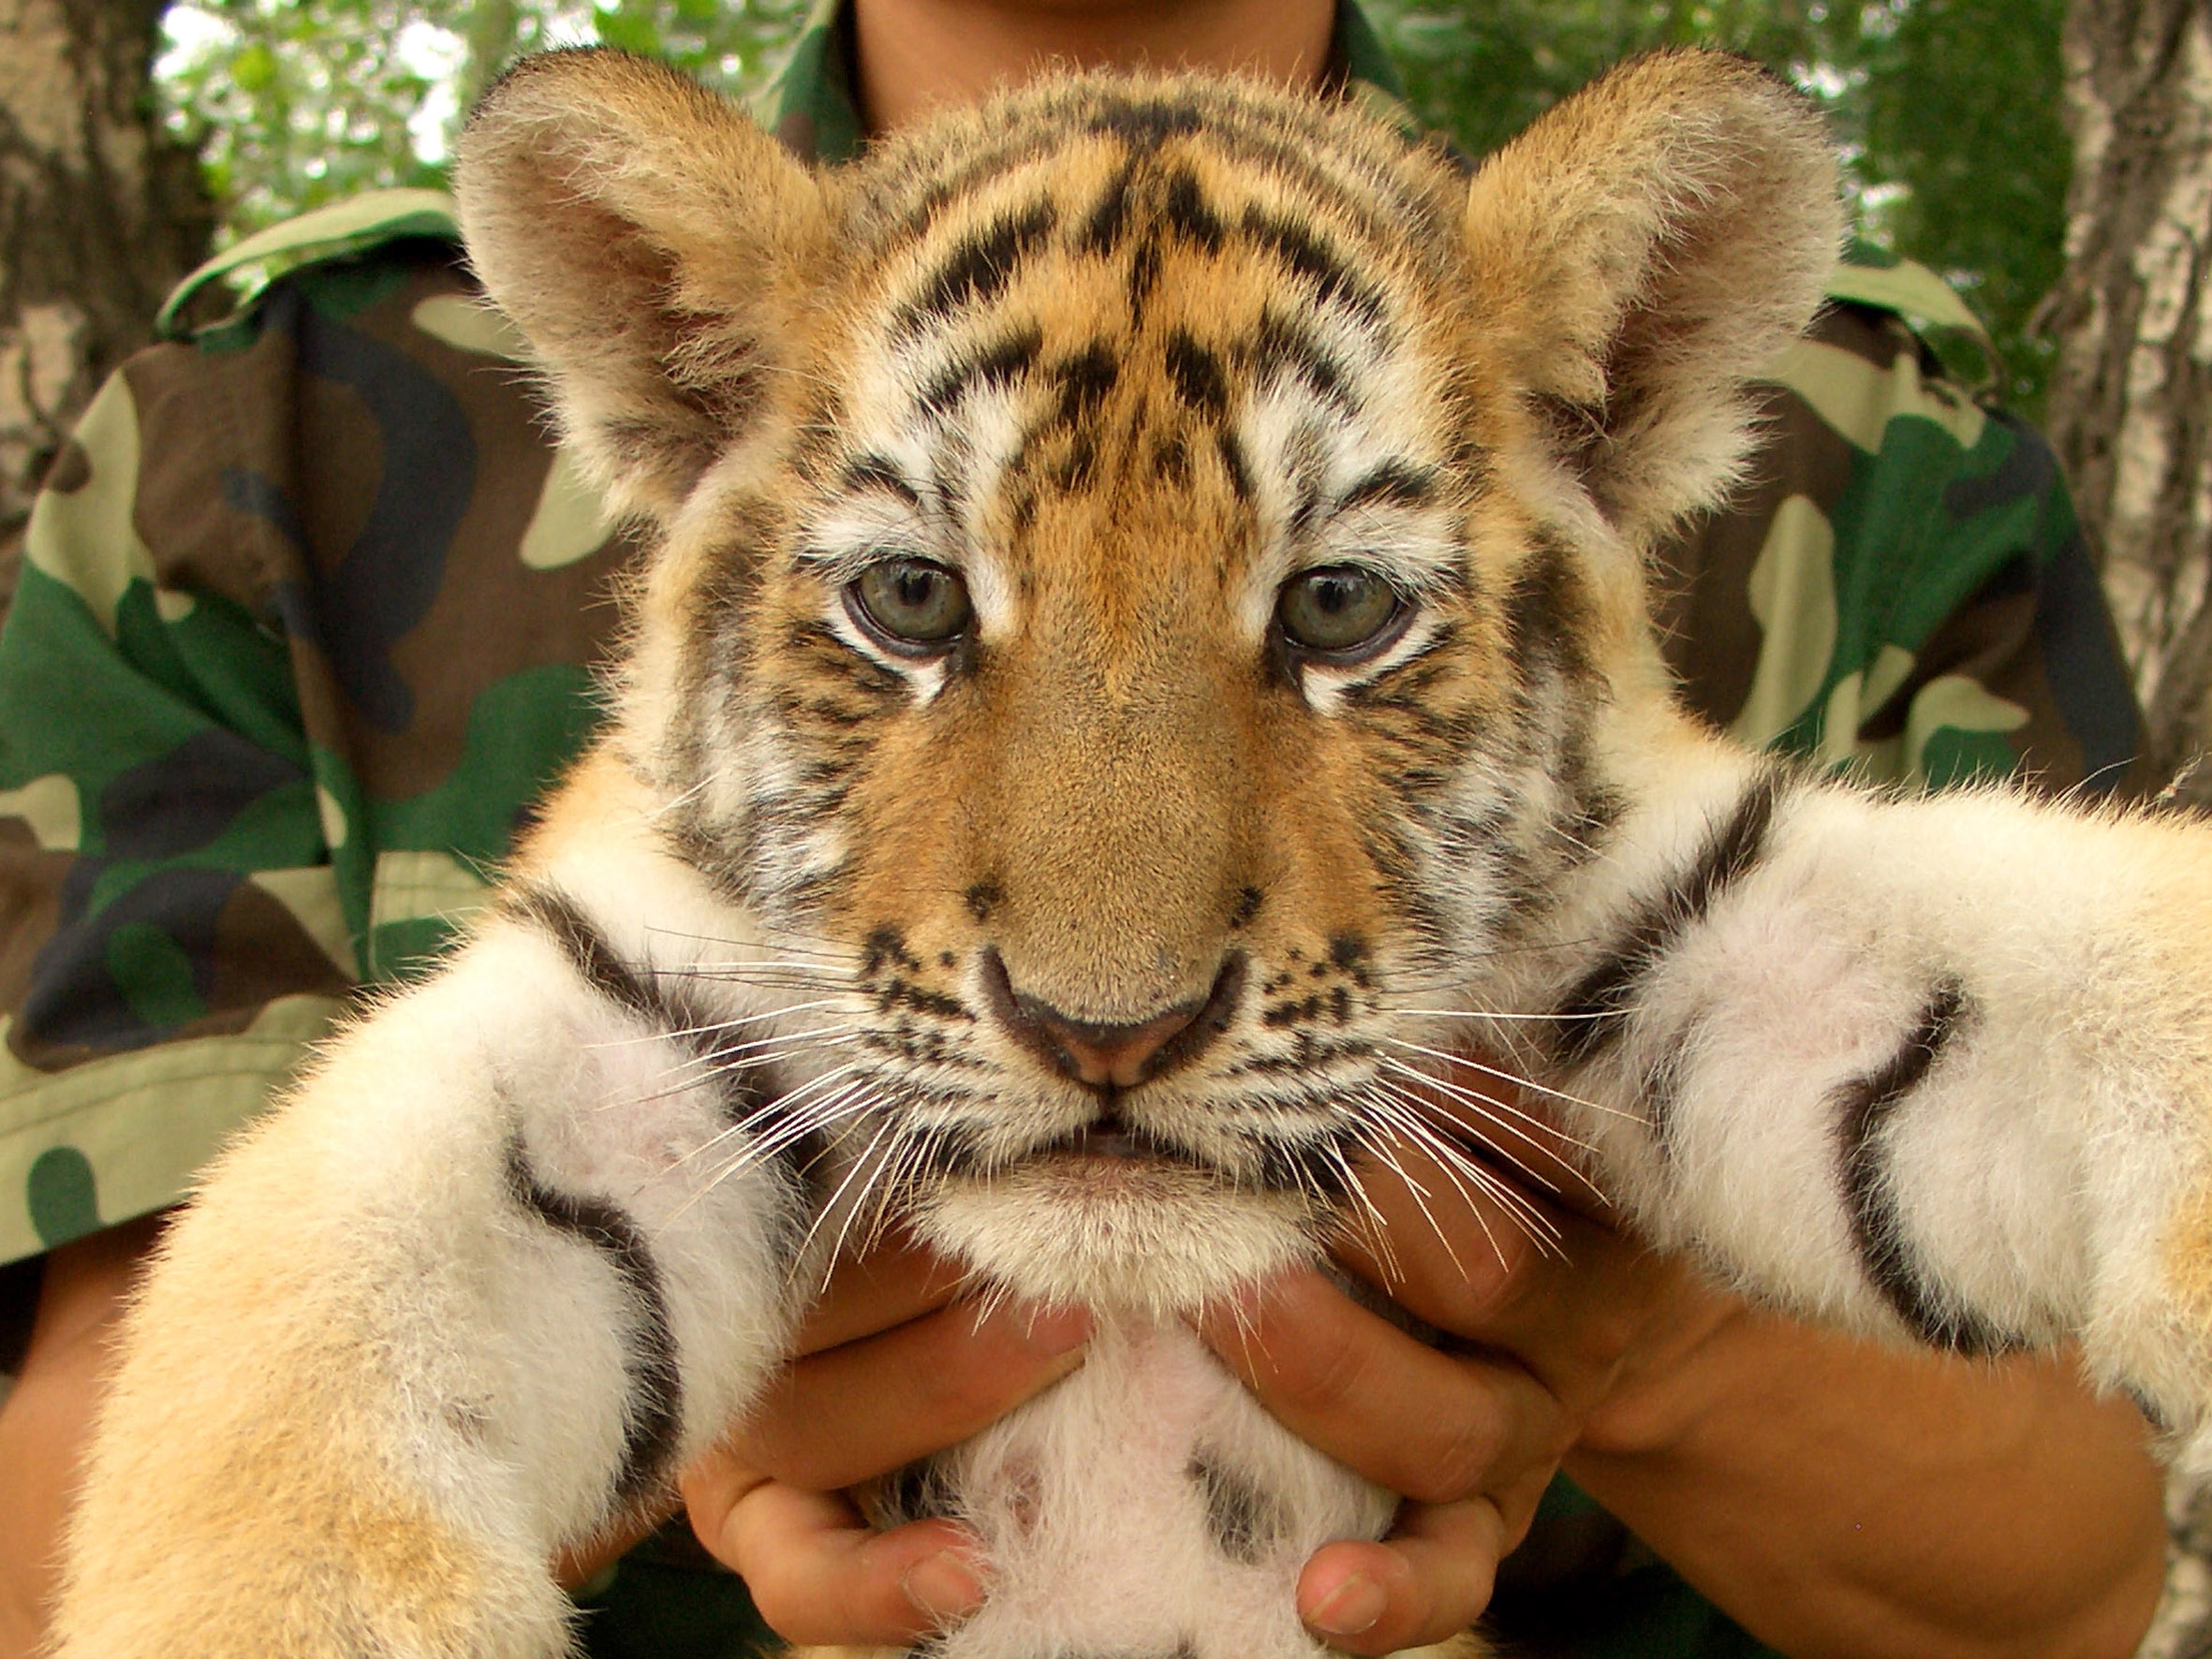 hands, tiger cub, animals, young, muzzle, tiger, kid, tot, joey